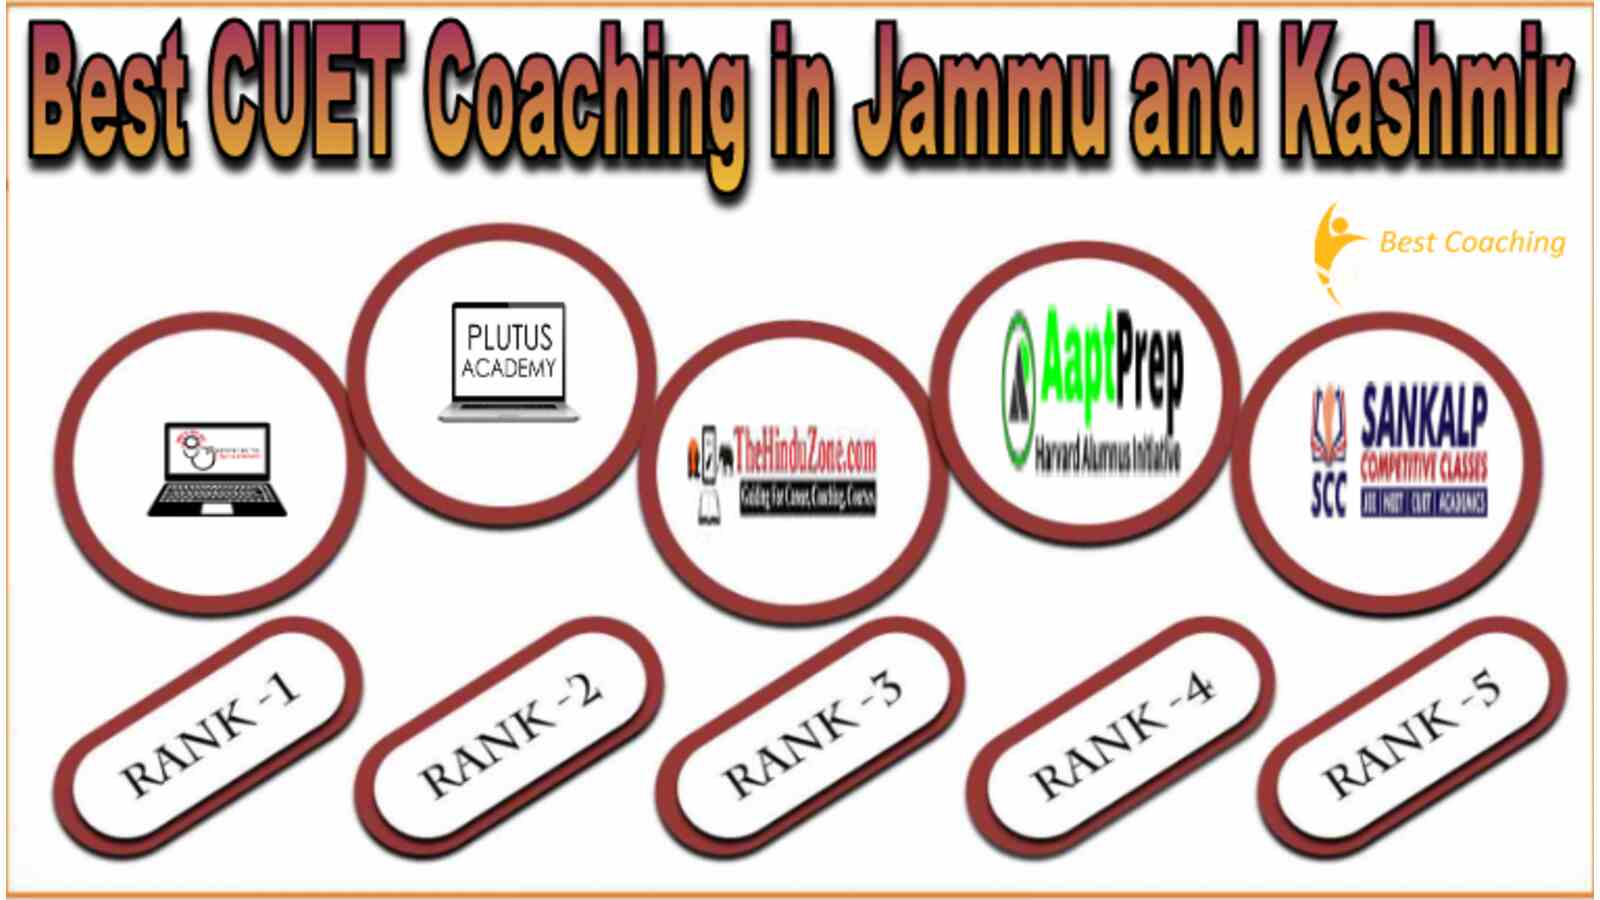 Best CUET Coaching in Jammu and Kashmir